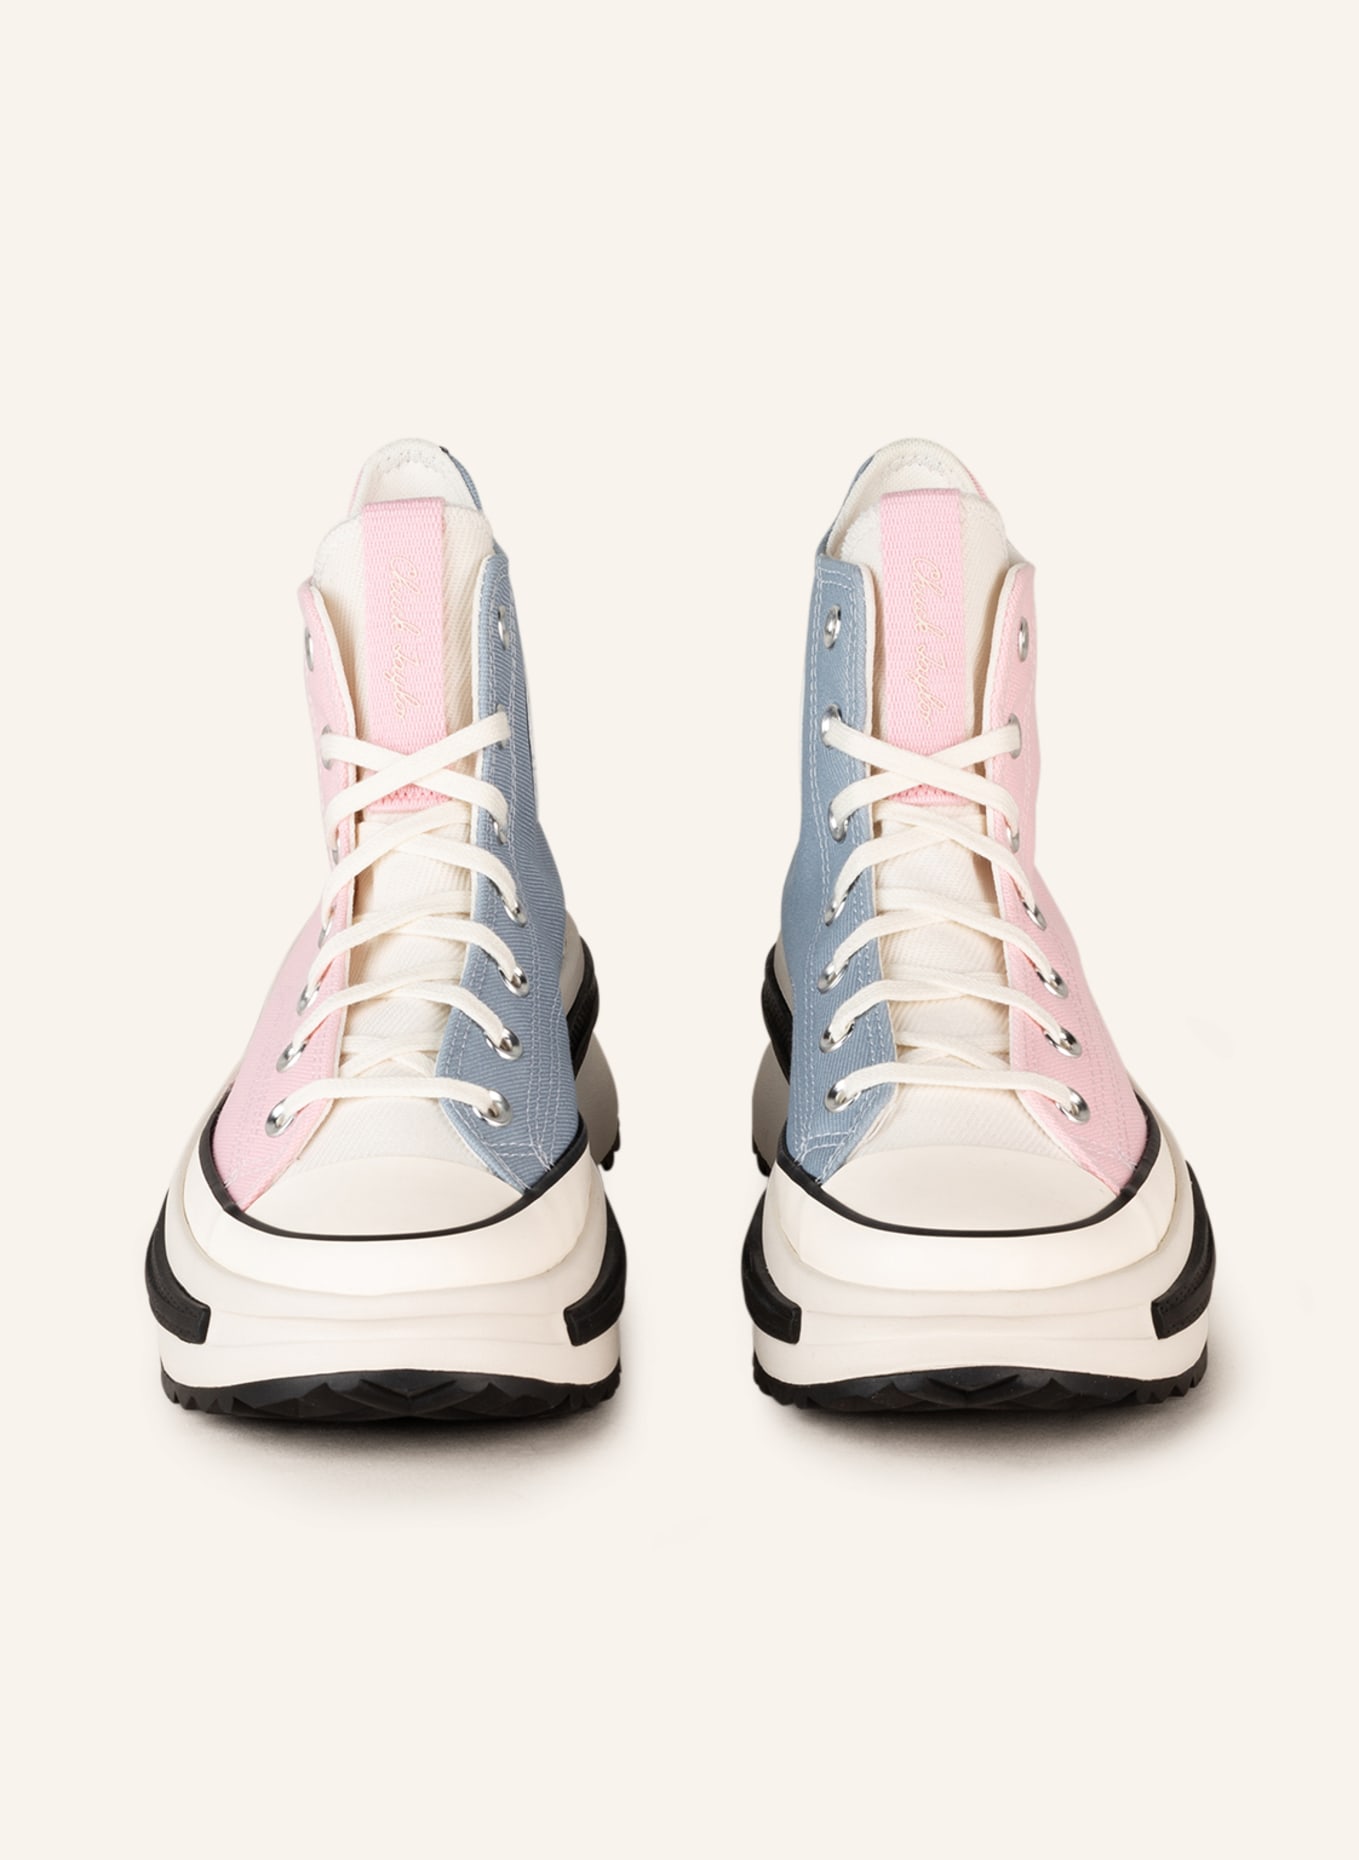 CONVERSE Hightop-Sneaker RUN STAR LEGACY CX, Farbe: BLAUGRAU/ ROSA (Bild 3)